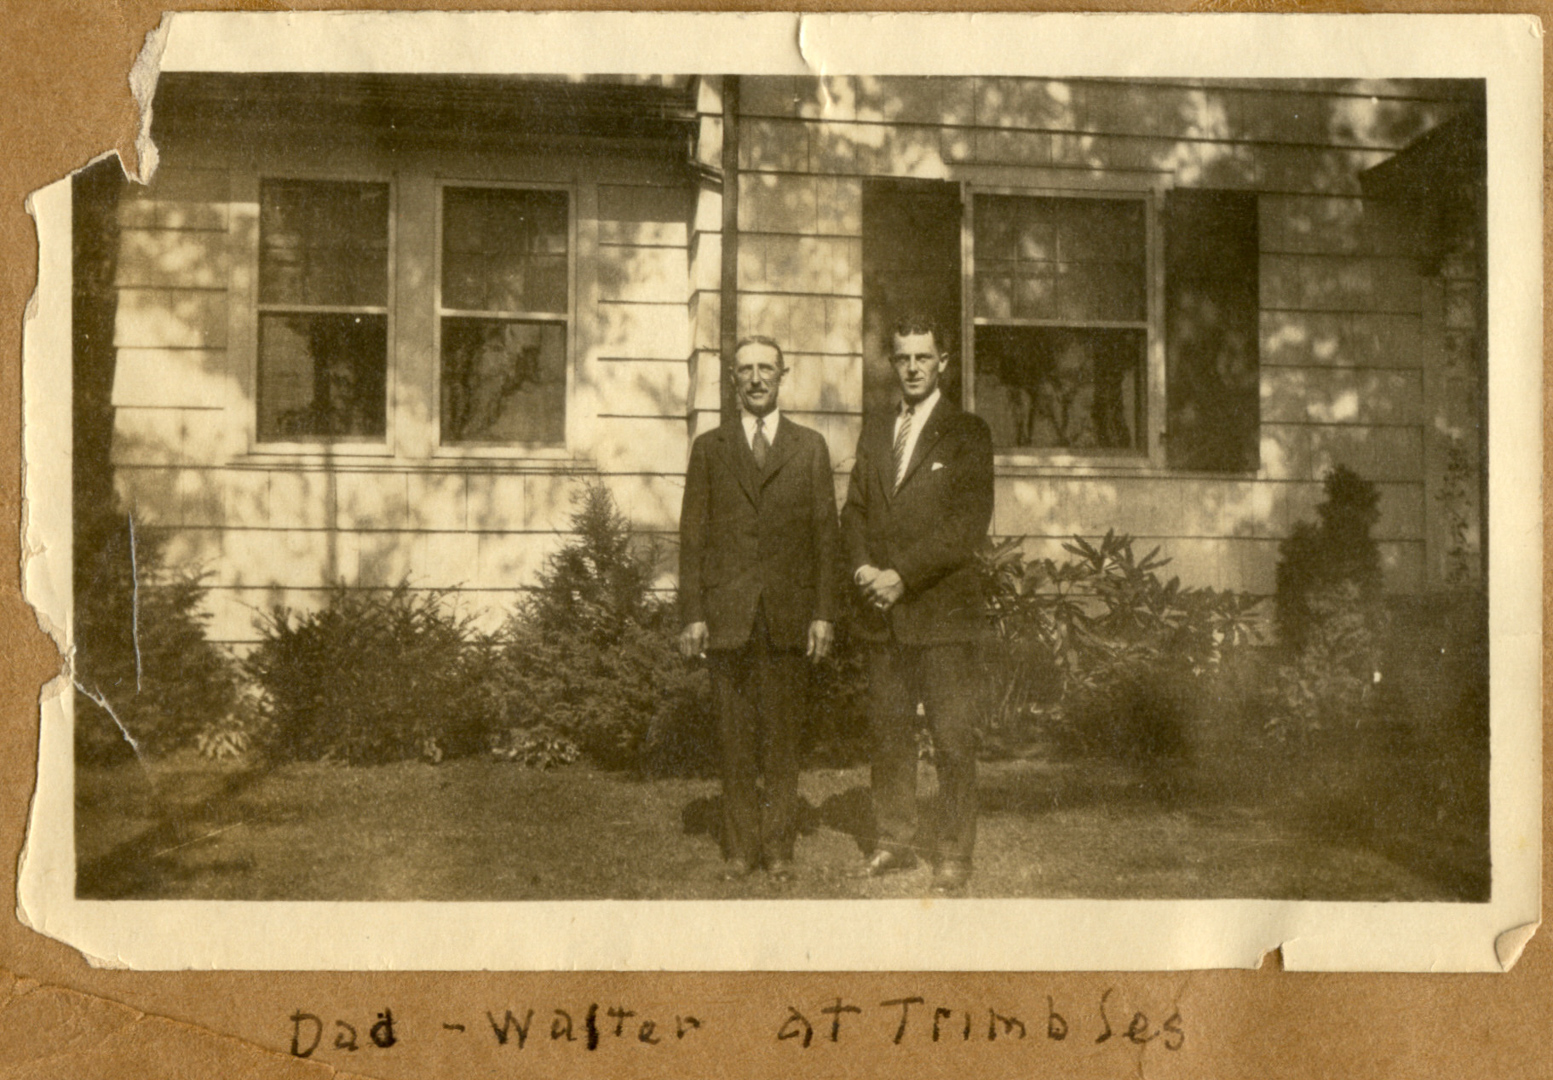 Dad & Walter at Trimbles